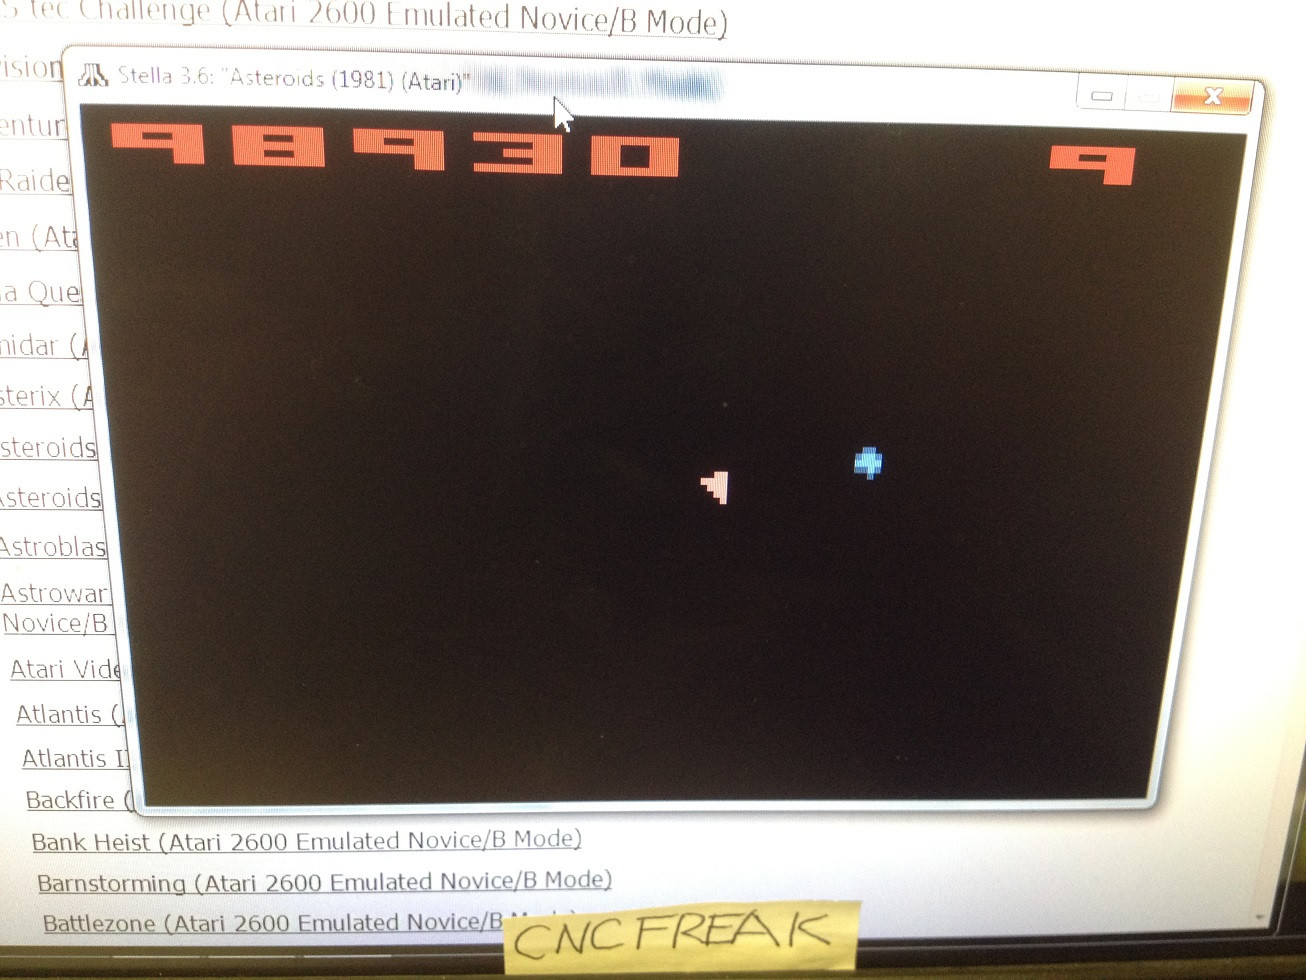 cncfreak: Asteroids (Atari 2600 Emulated Novice/B Mode) 98,930 points on 2013-10-17 10:03:15